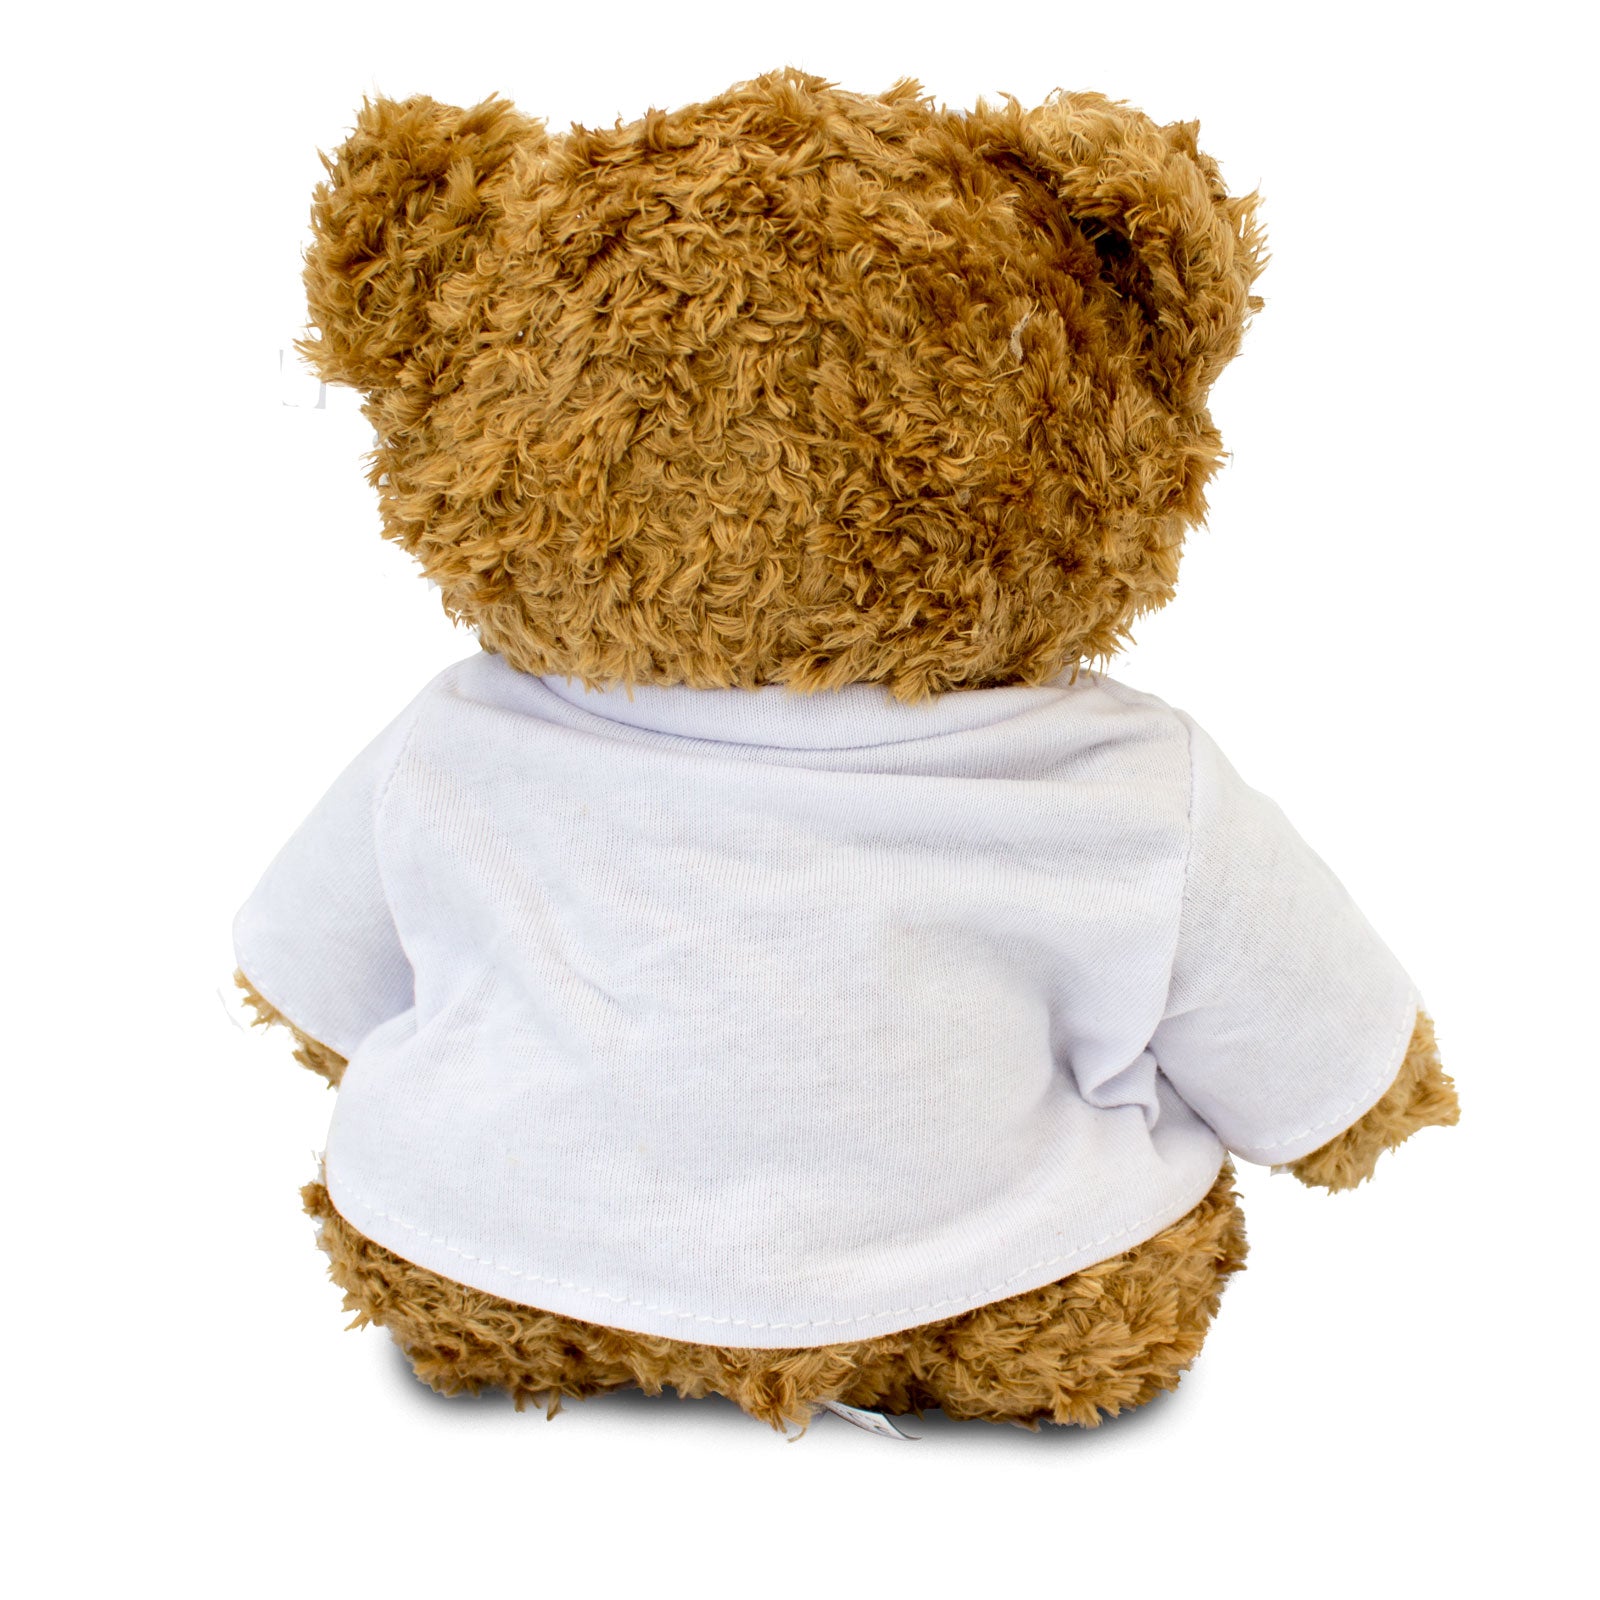 Get Well Soon Jim - Teddy Bear